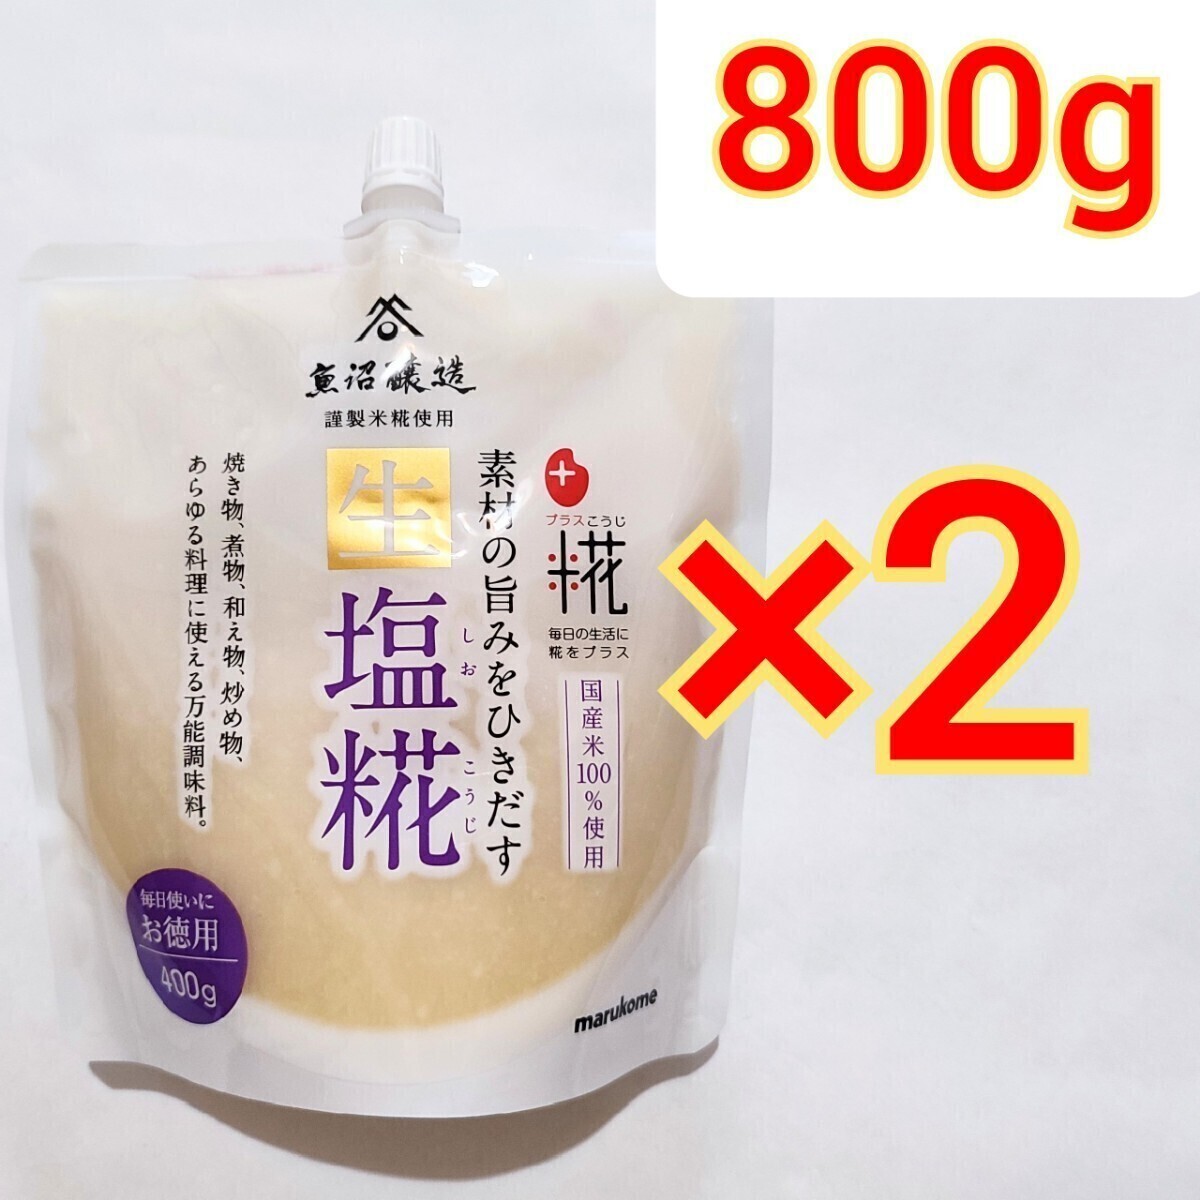 Marcome Plus Koji Raw Salt Coji Значение 400G x 2 сумки универсальная приправа